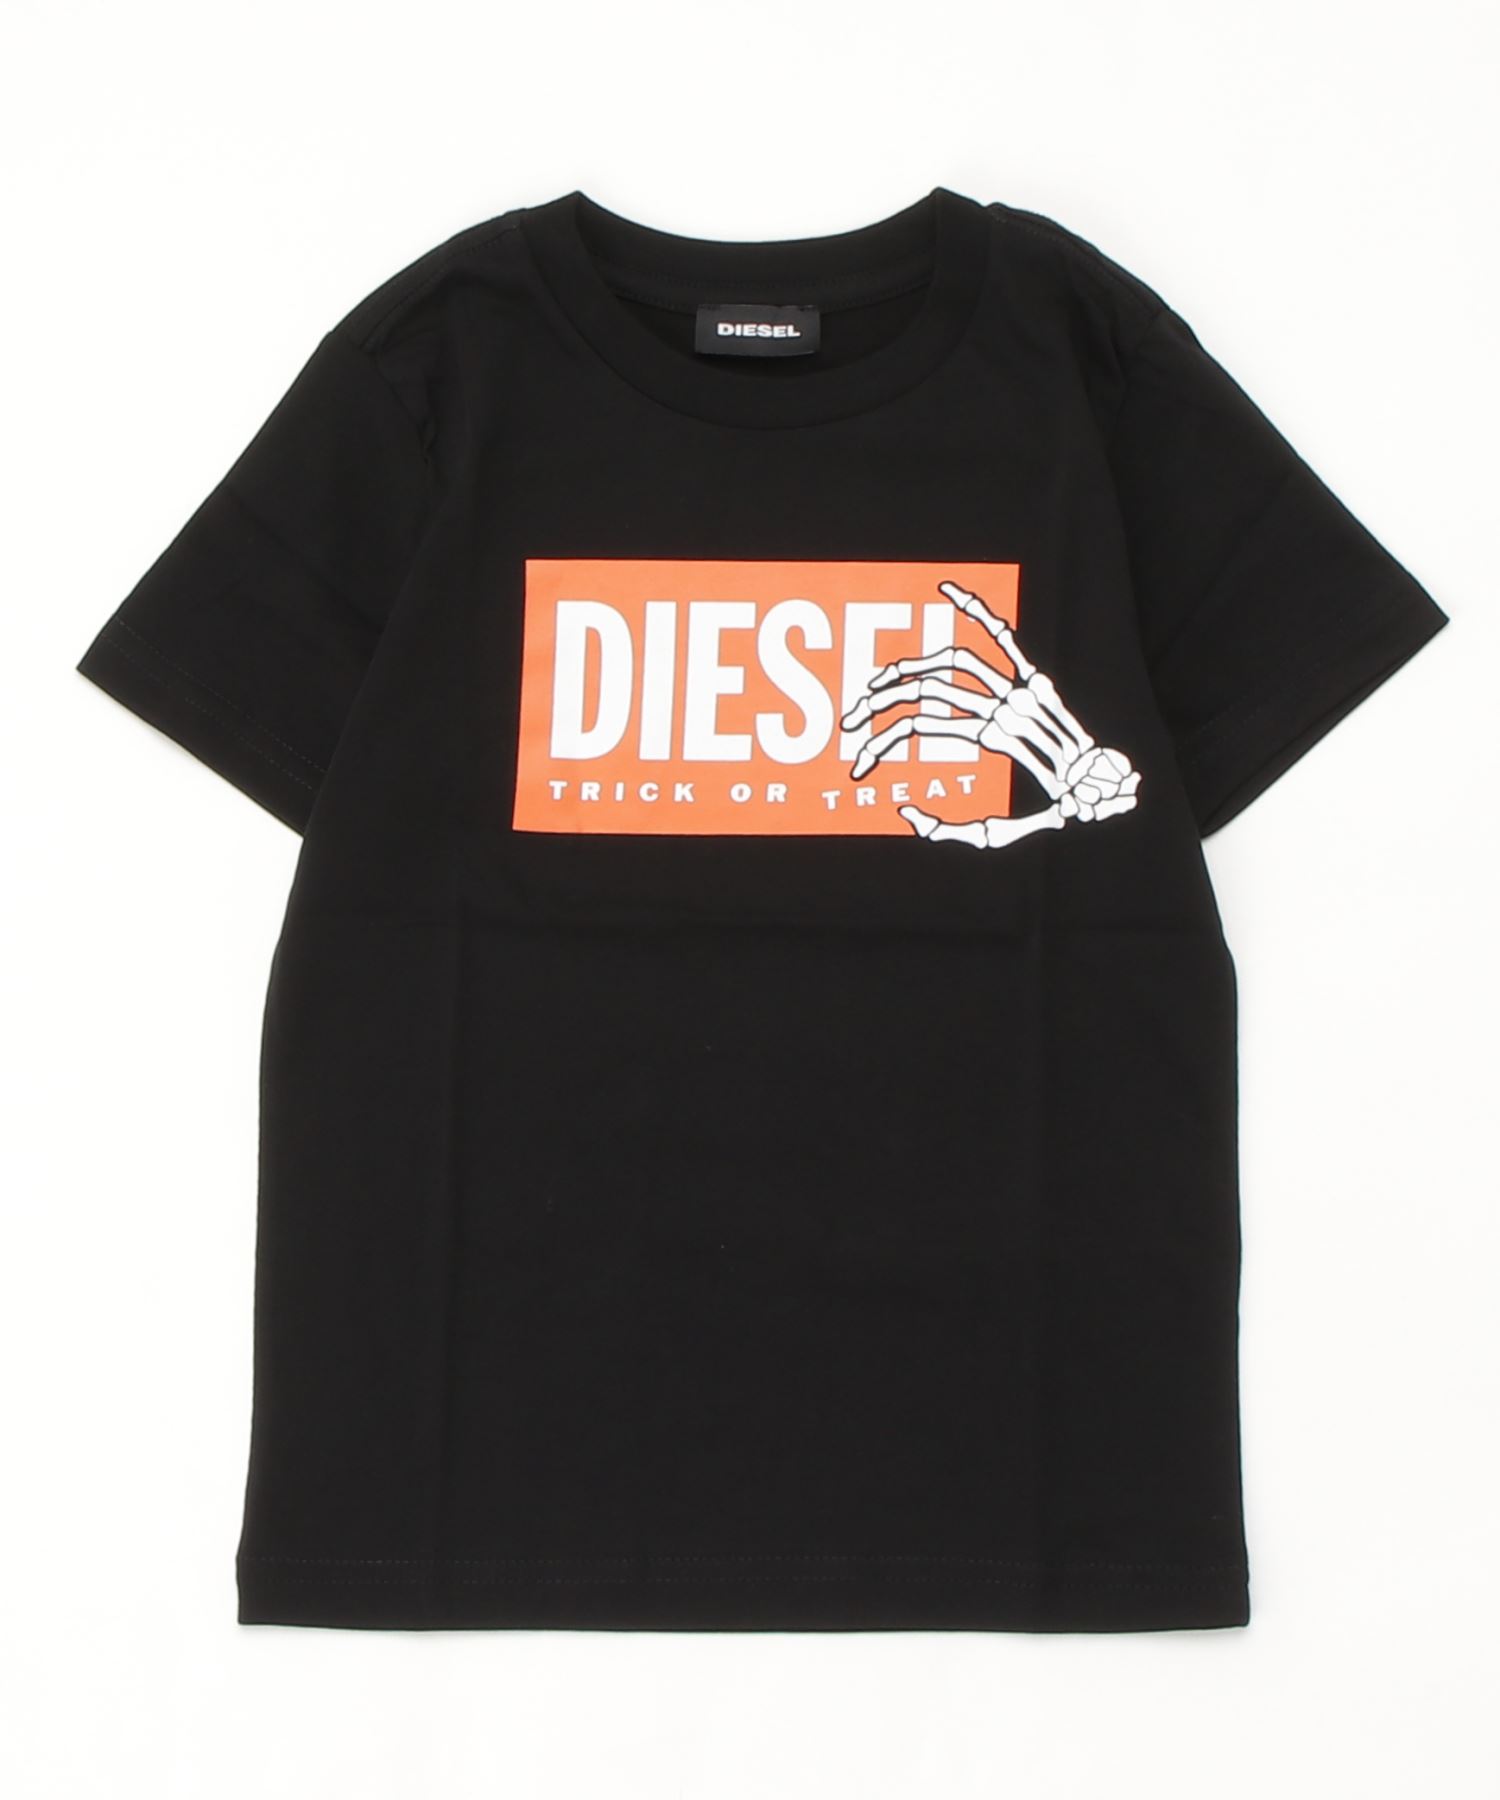 DIESEL KIDSDIESEL ディーゼル 正規逆輸入品 Kids プリント半袖Tシャツカットソー 迅速な対応で商品をお届け致します Junior